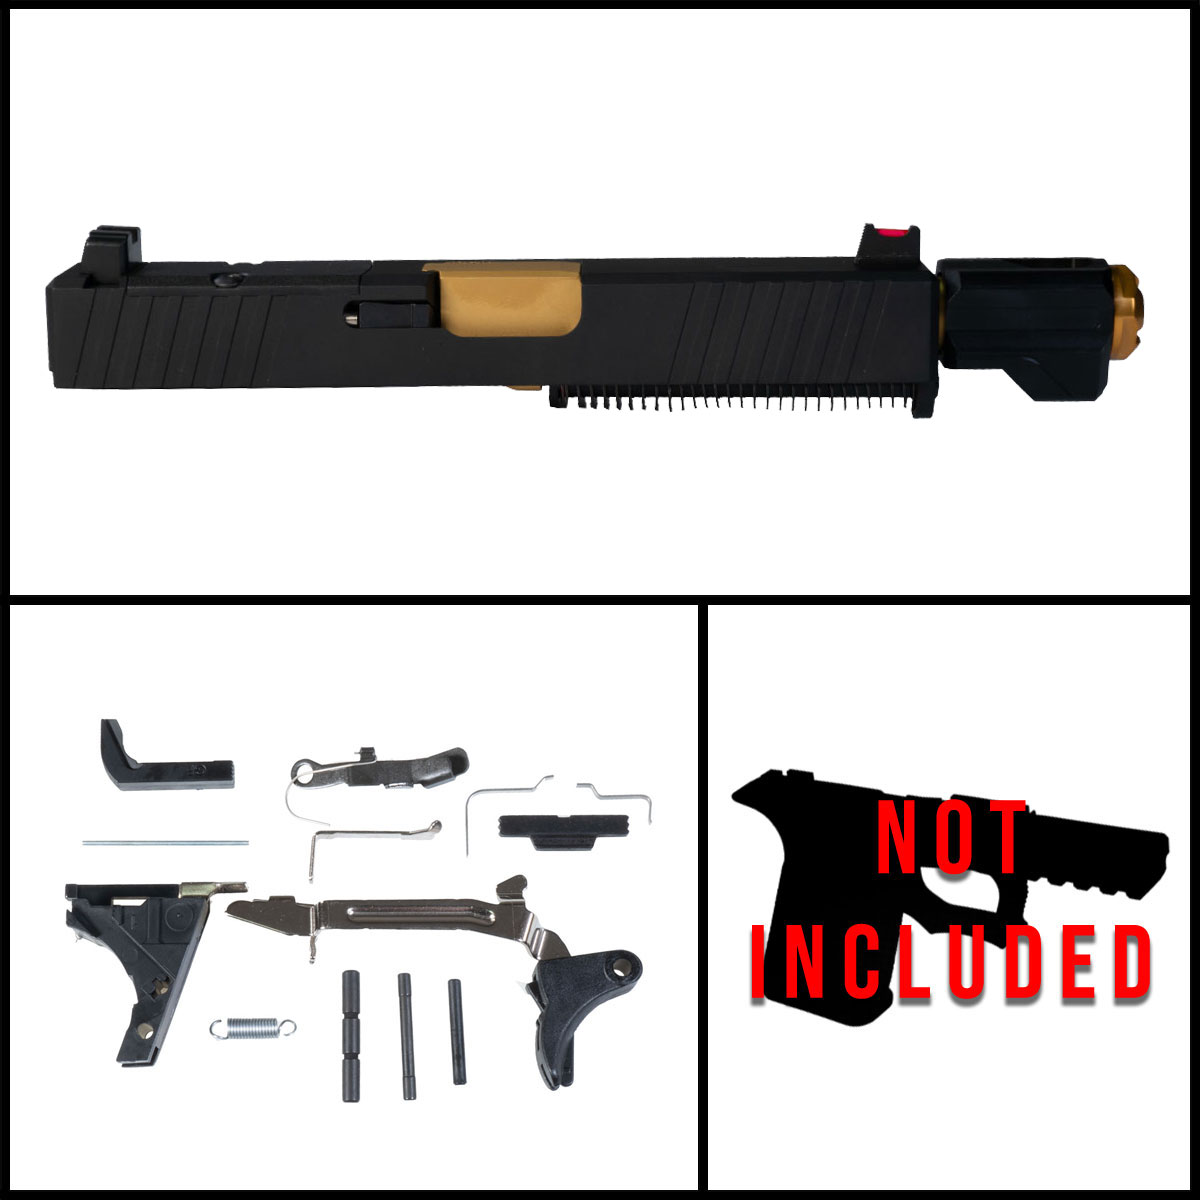 DDS 'Bam w/ Tyrant Designs Compensator' 9mm Full Pistol Build Kit (Everything Minus Frame) - Glock 19 Gen 1-3 Compatible